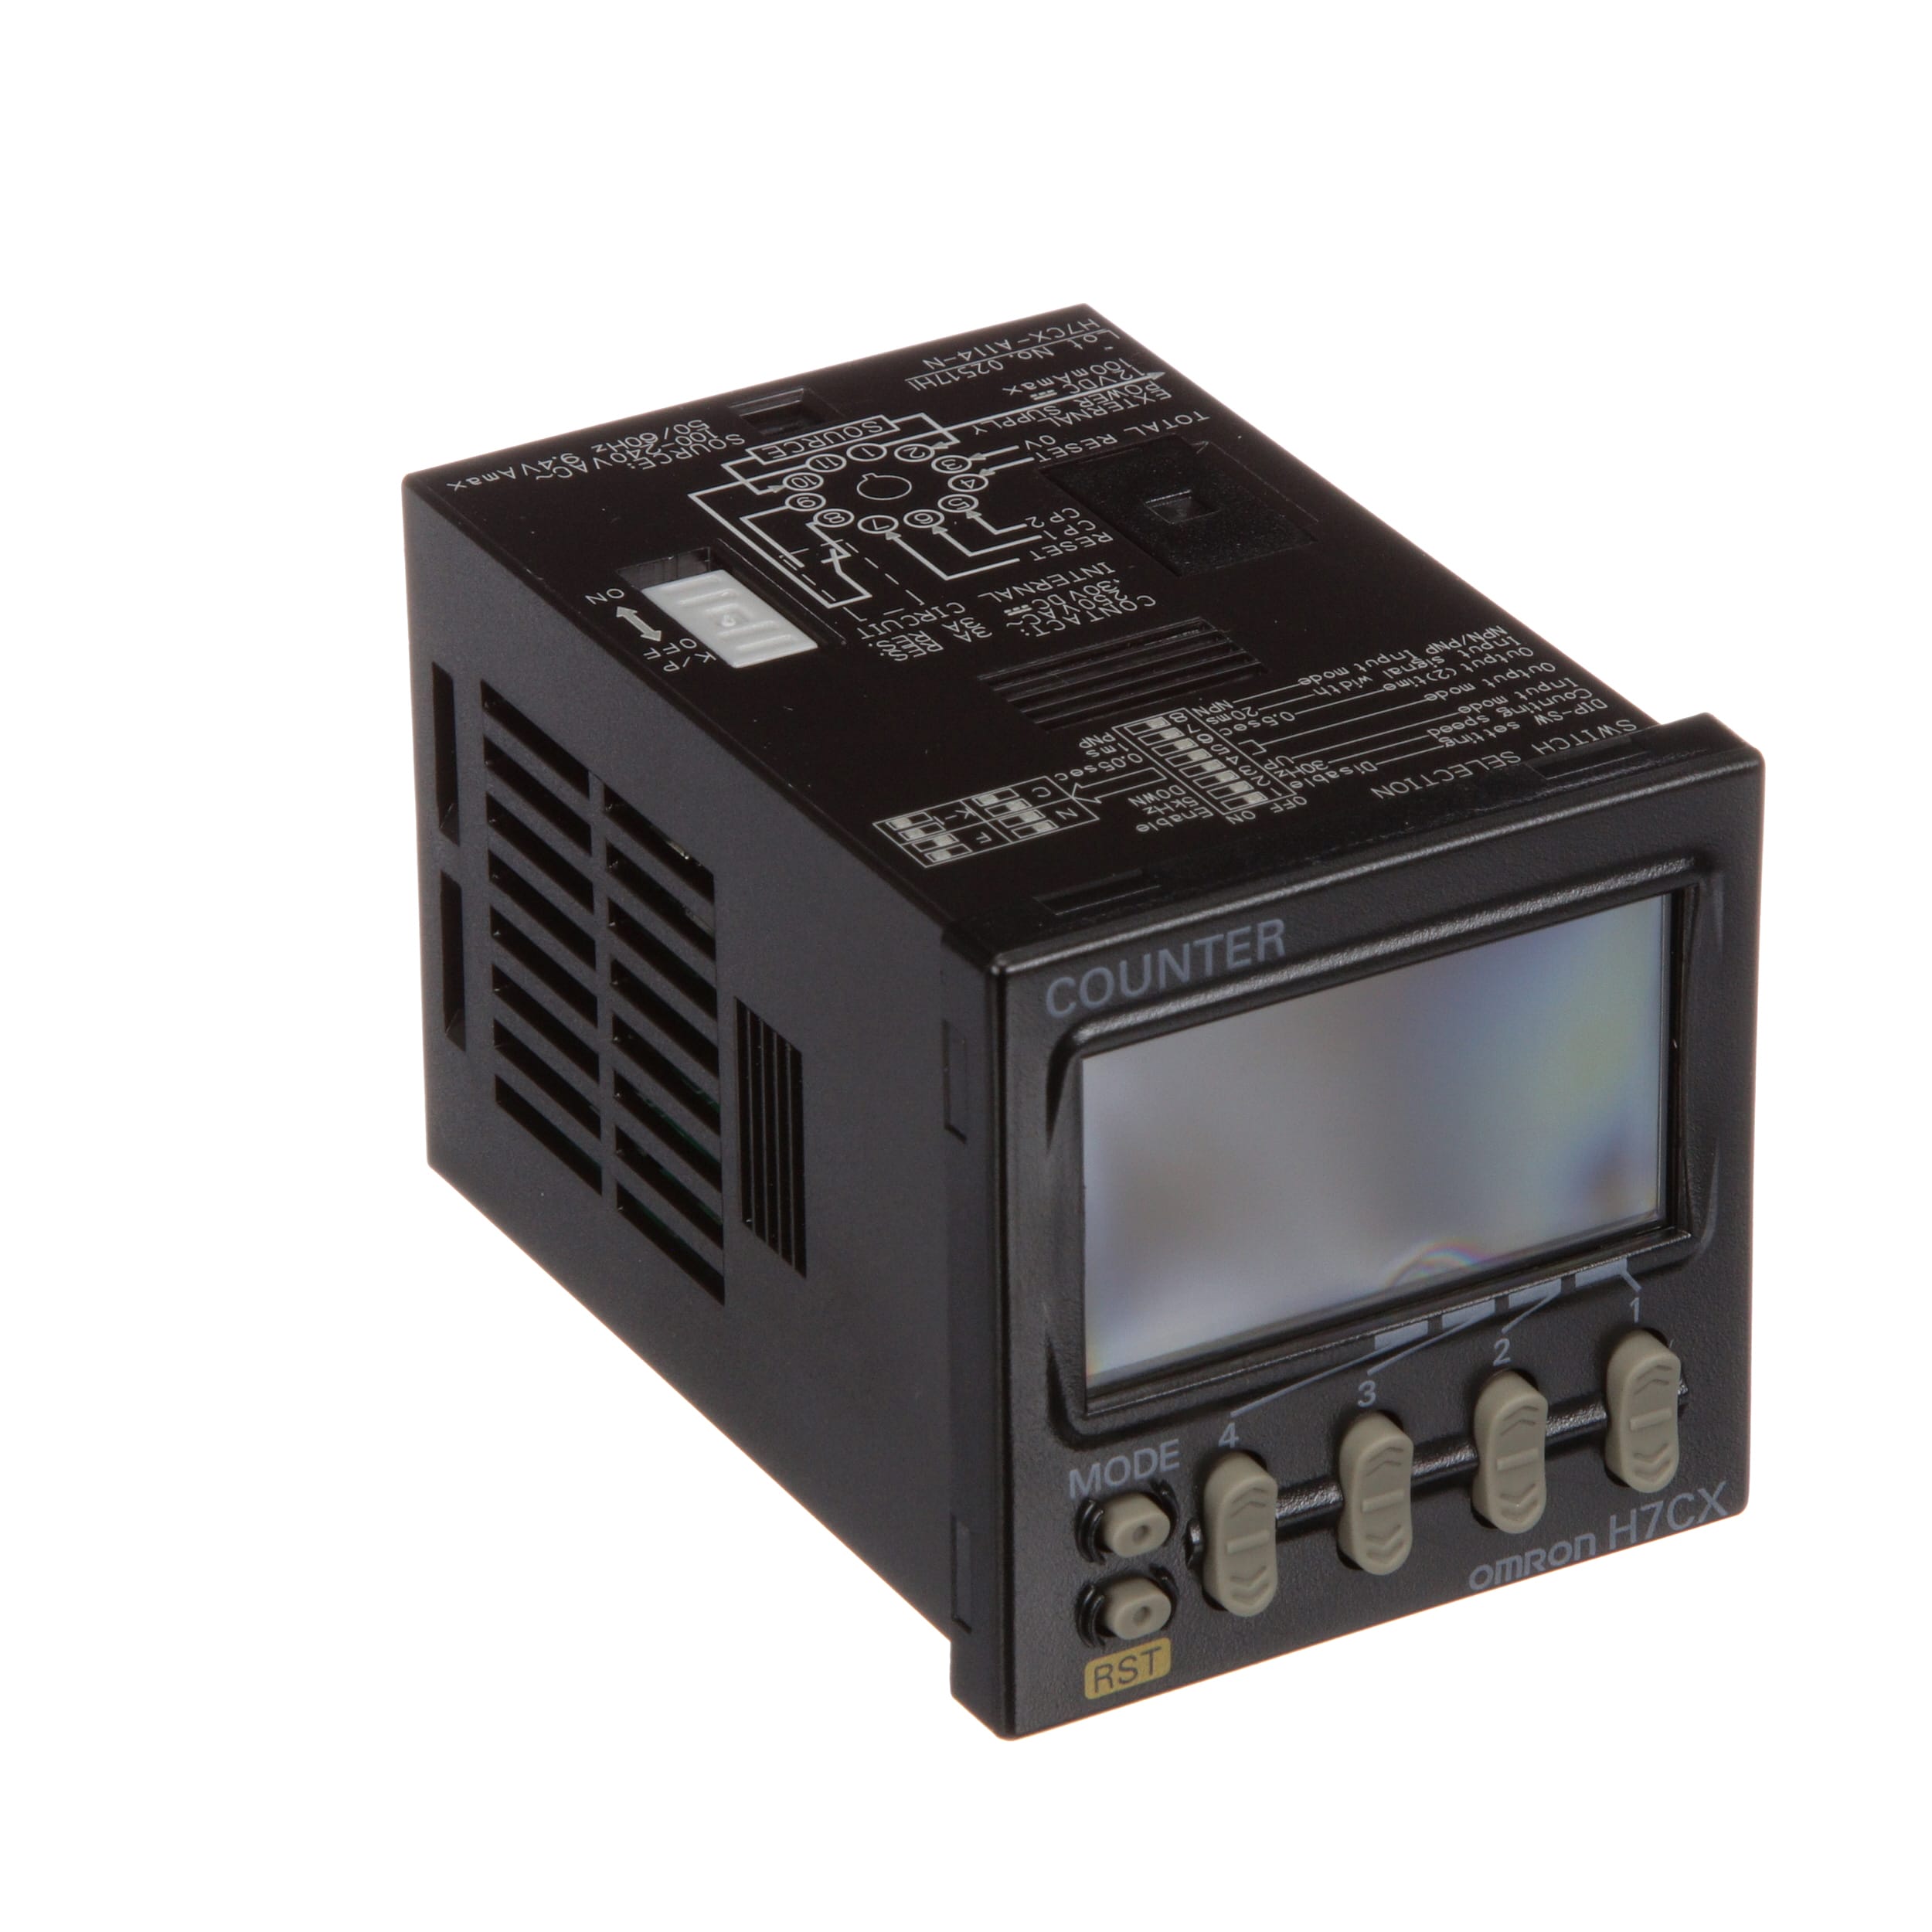 OMRON Digital Counter H7CX-A114-N H7CXA114N 100-240VAC Original New in Box NIB 